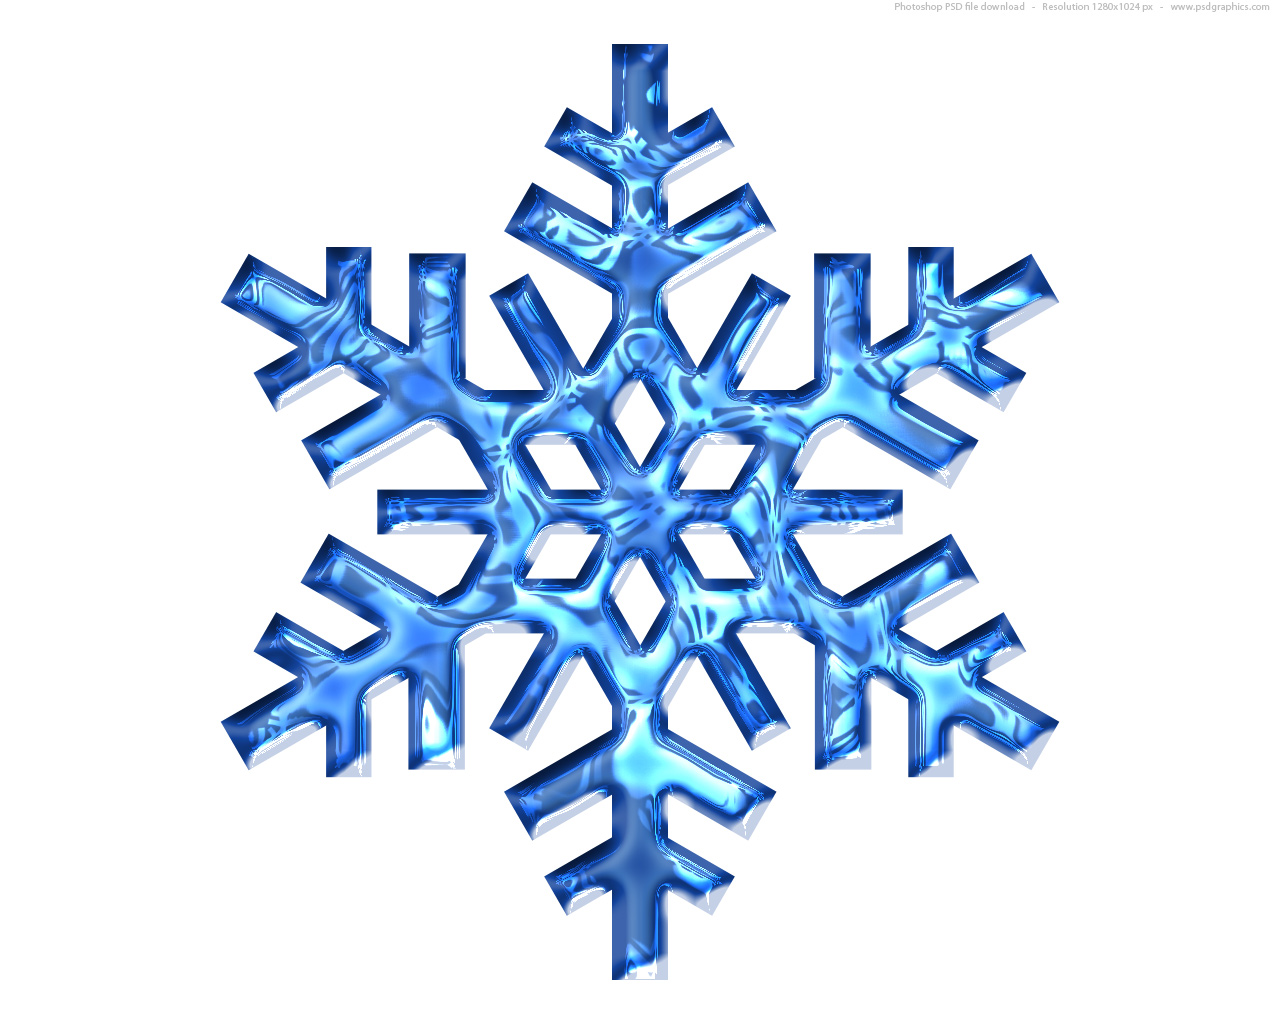 Snowflake Clipart Free Printable